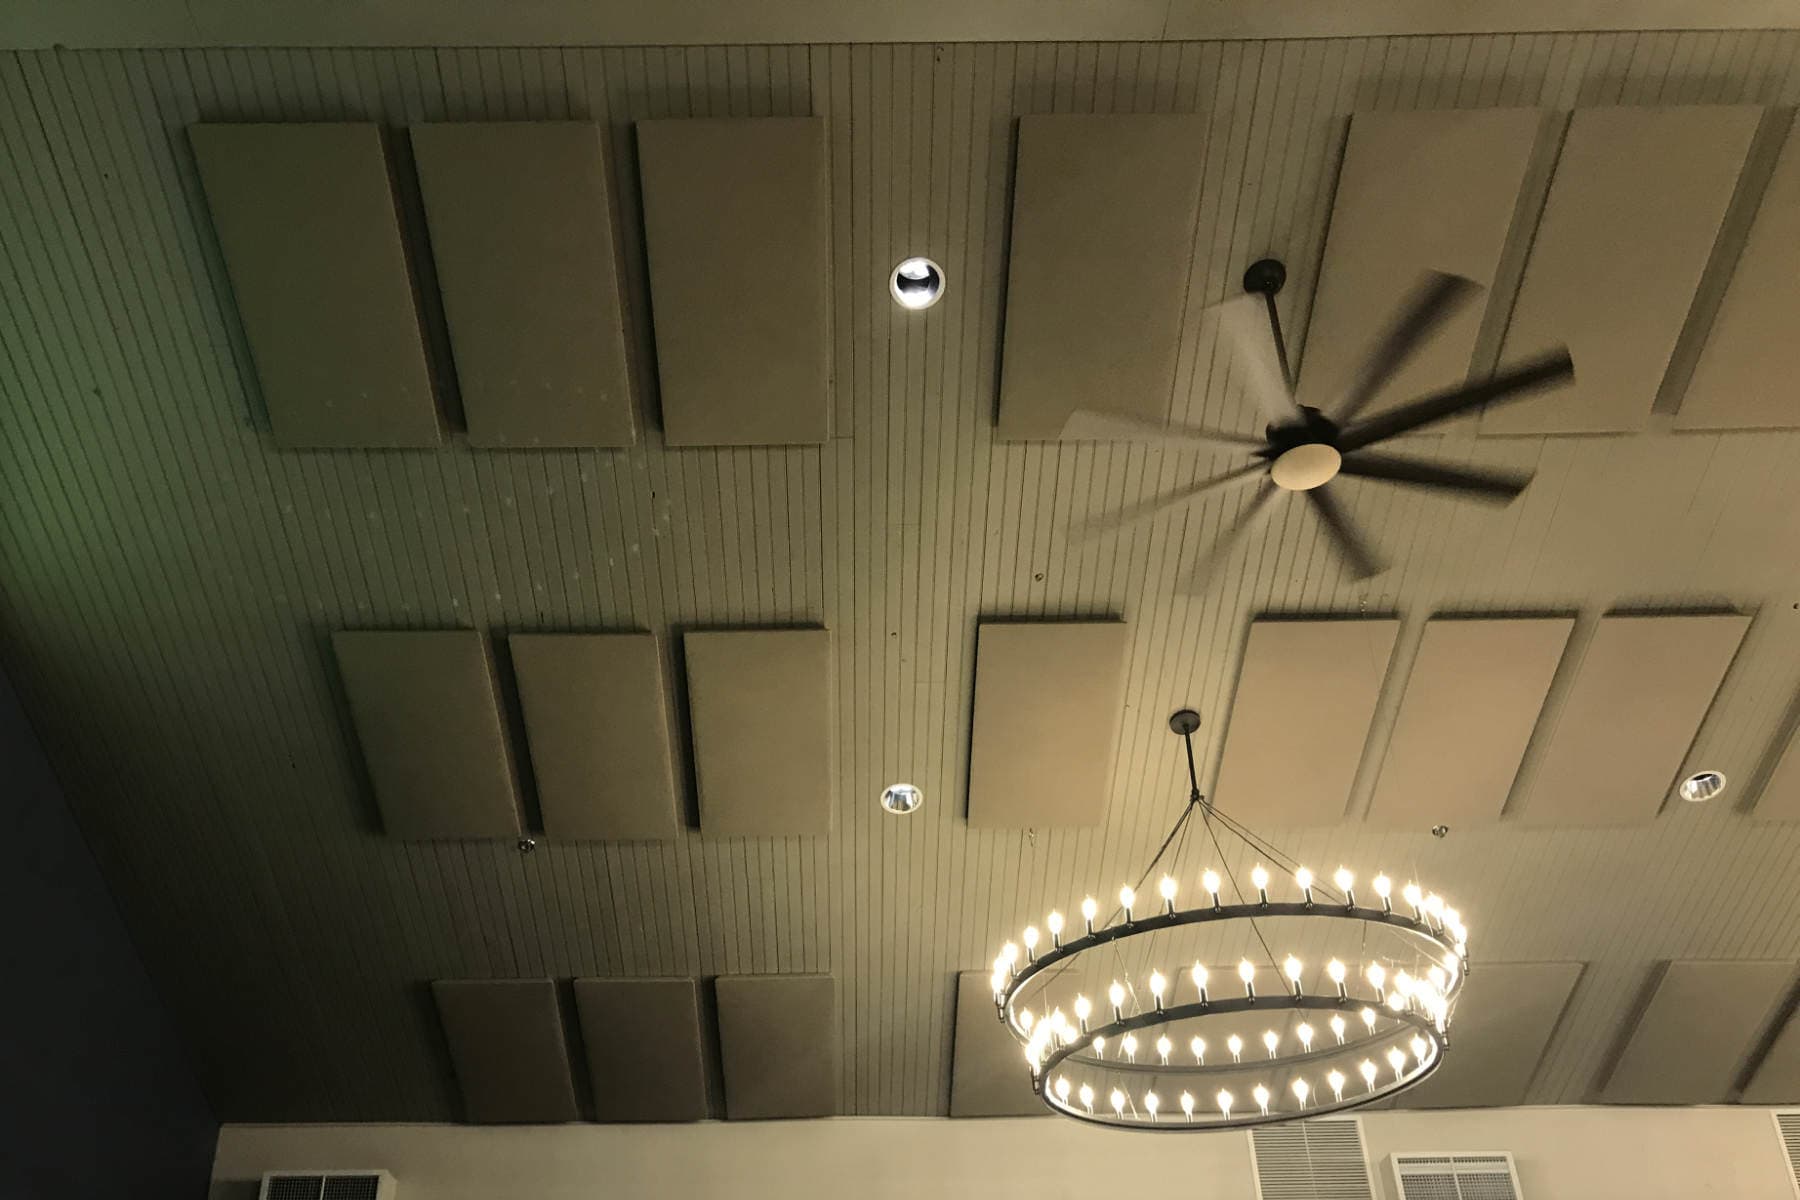 WAVEPro acoustic panels on ceiling of restaurant